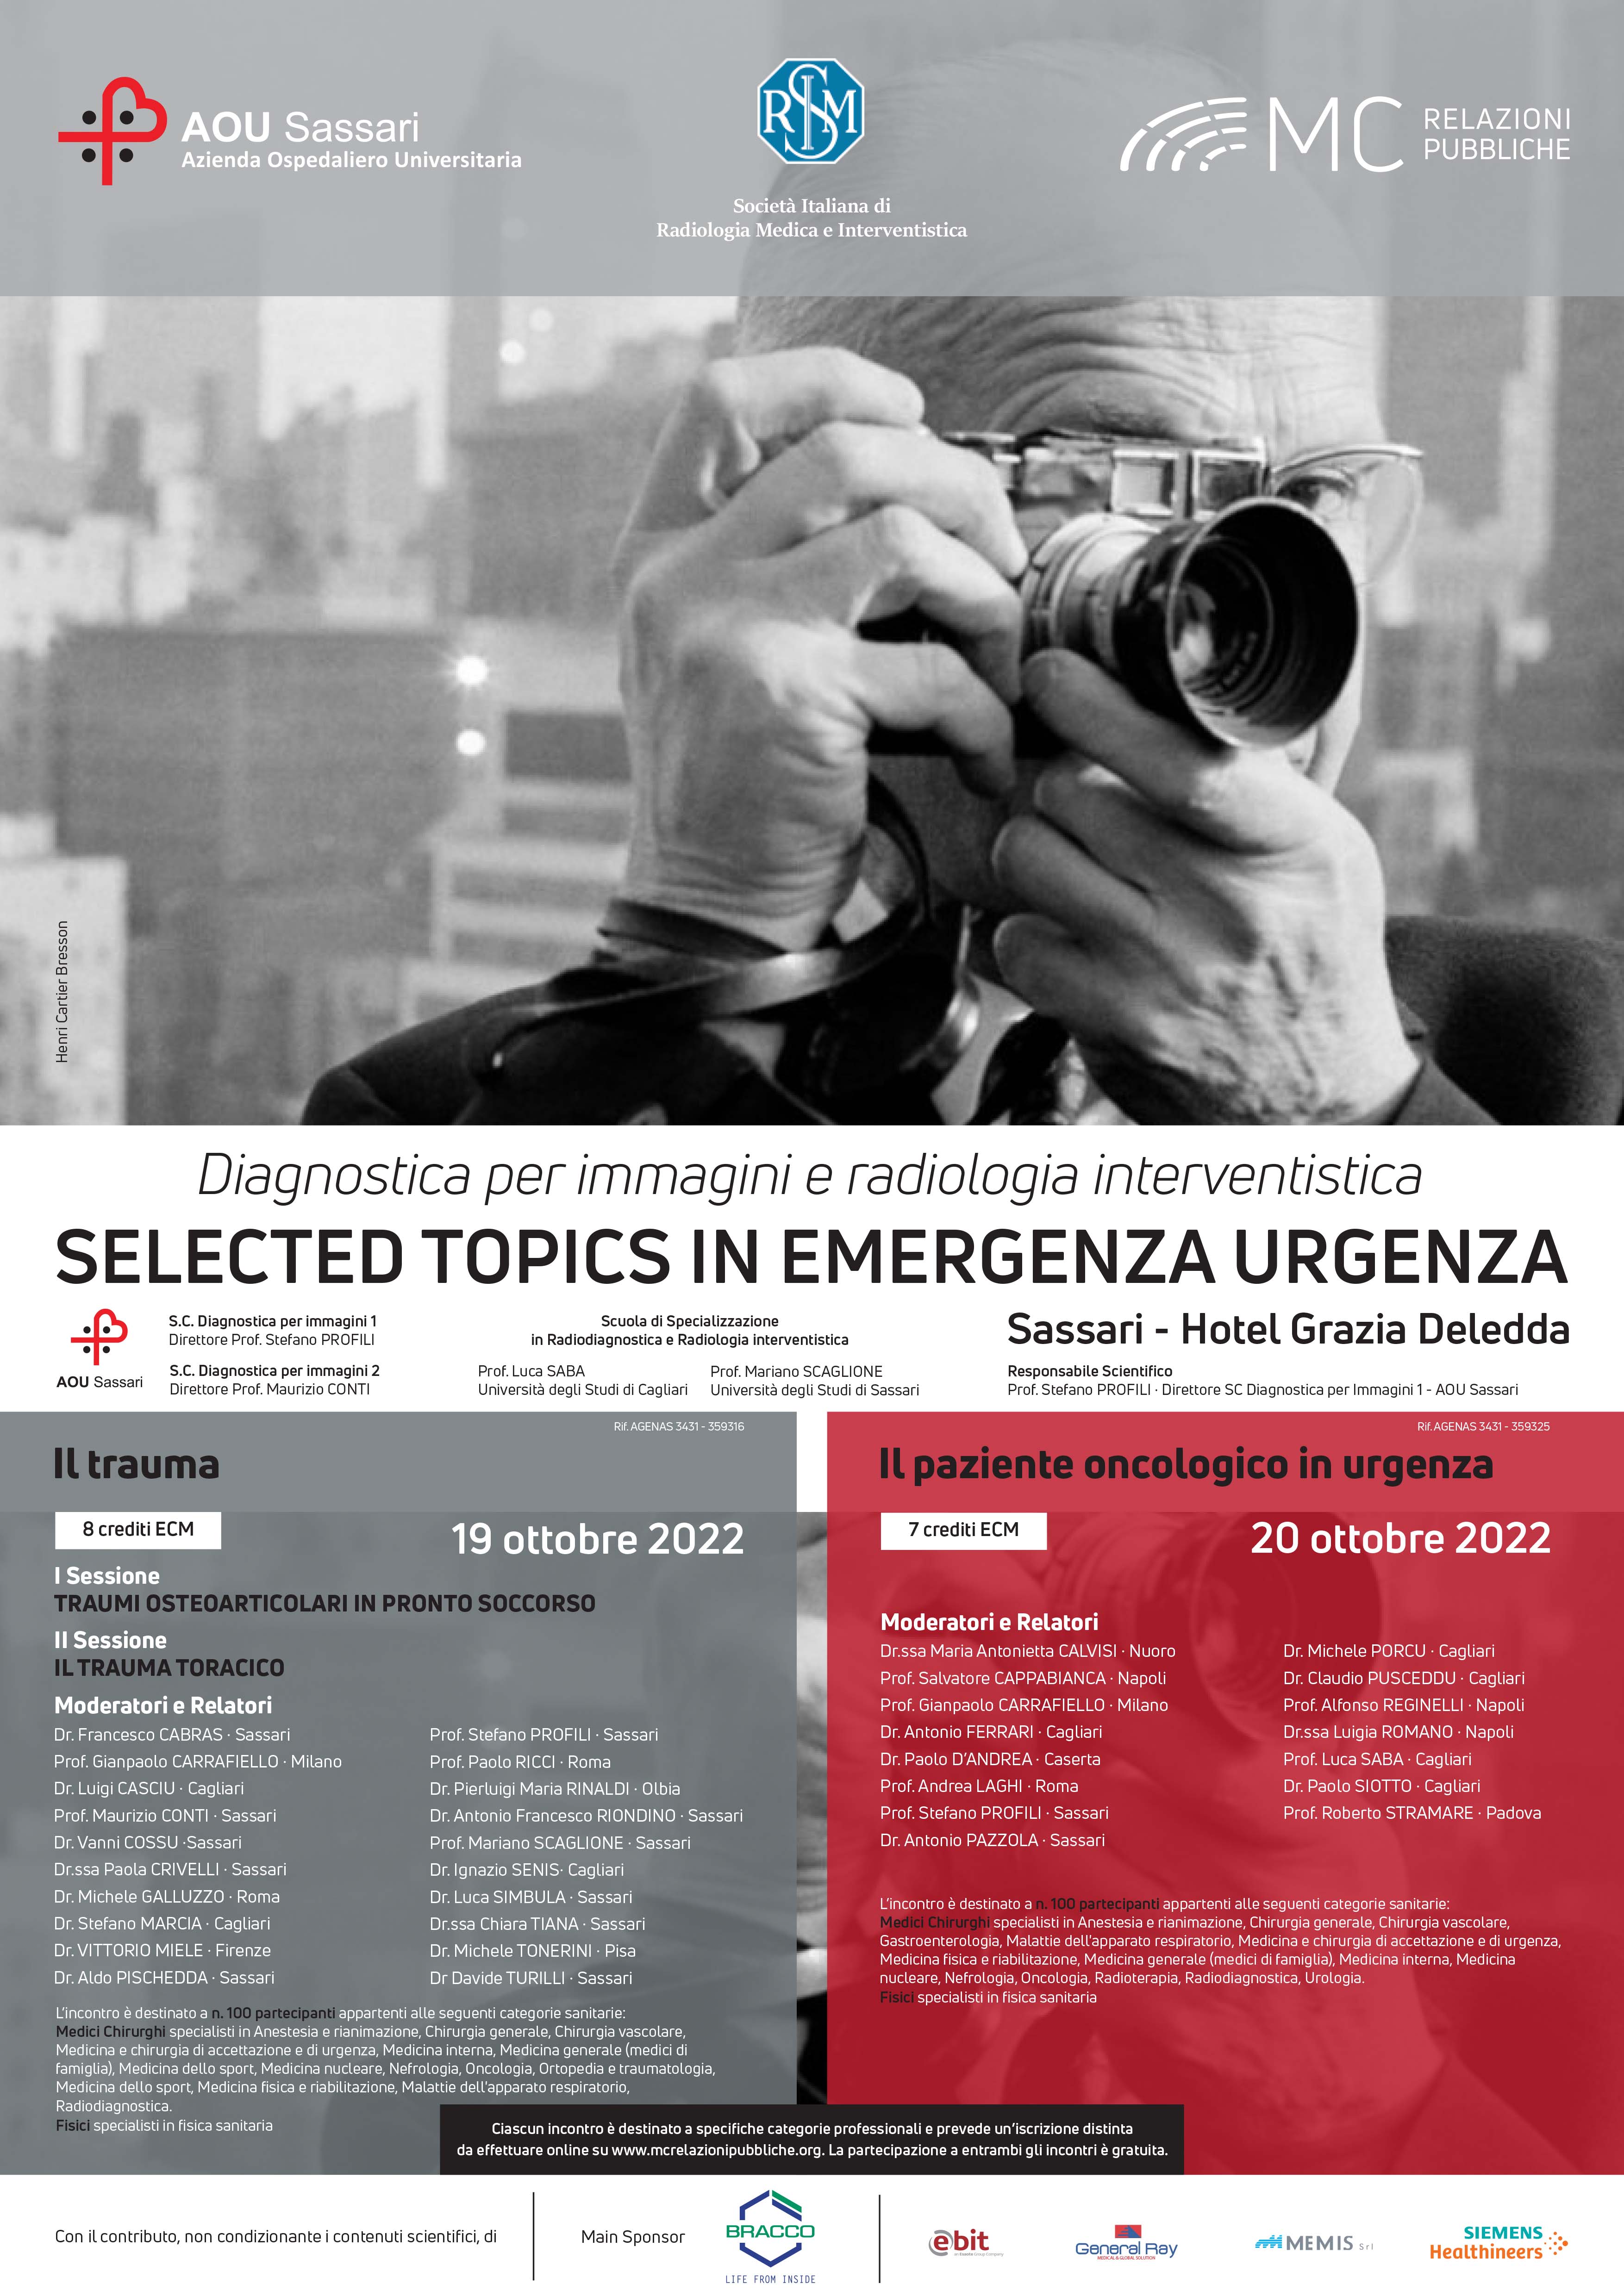 IL TRAUMA. Selected topics in emergenza urgenza